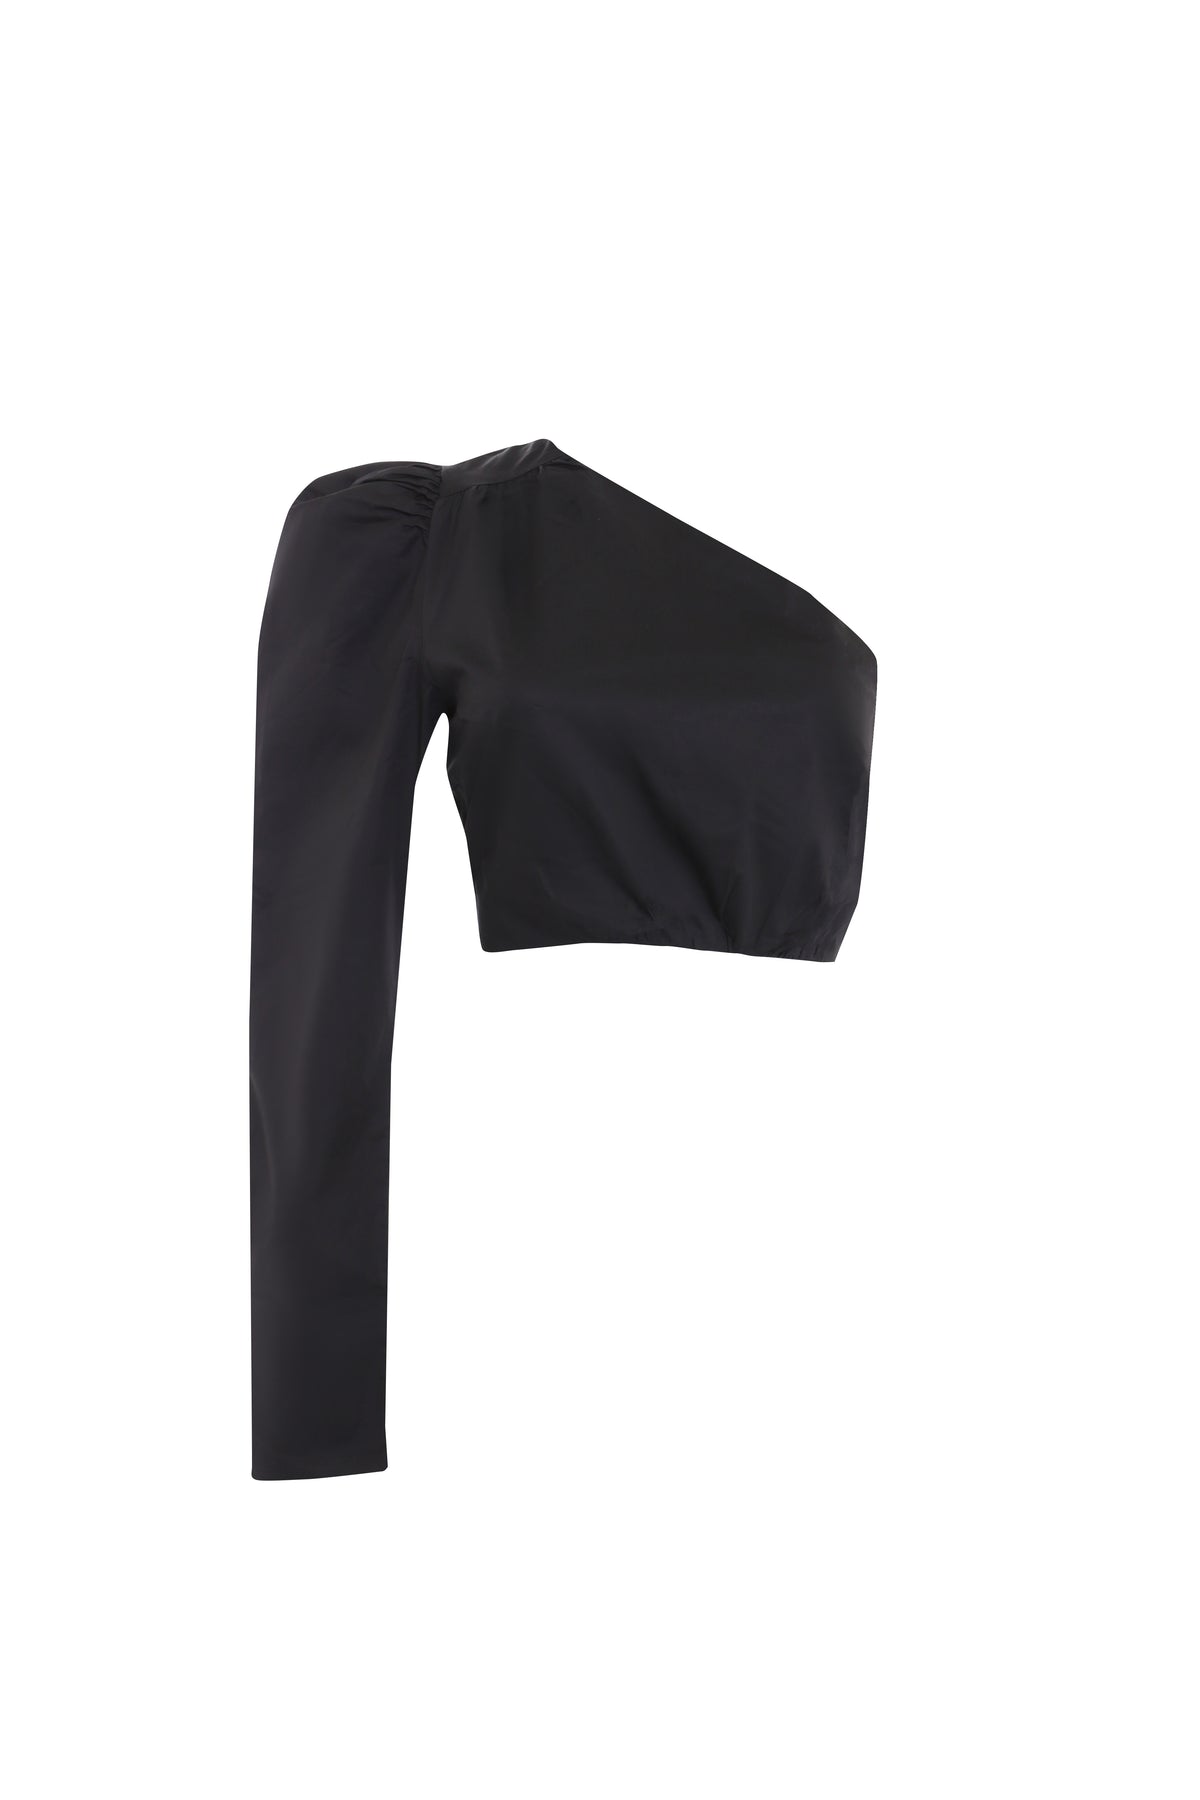 Glamorous Black Asymmetrical Long Sleeve Crop-Top